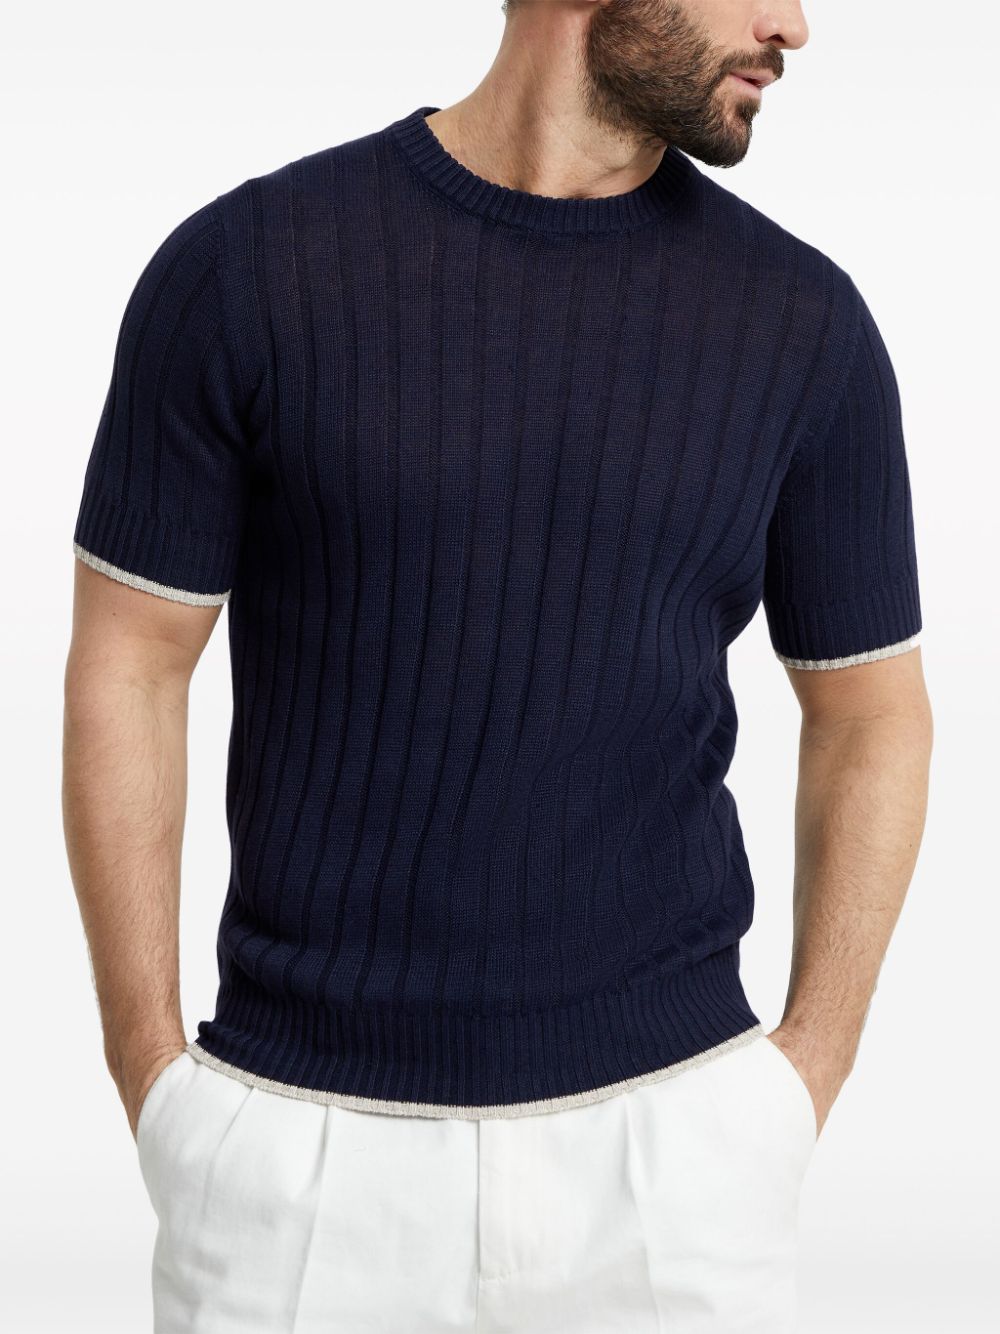 Blue knitted T-shirt